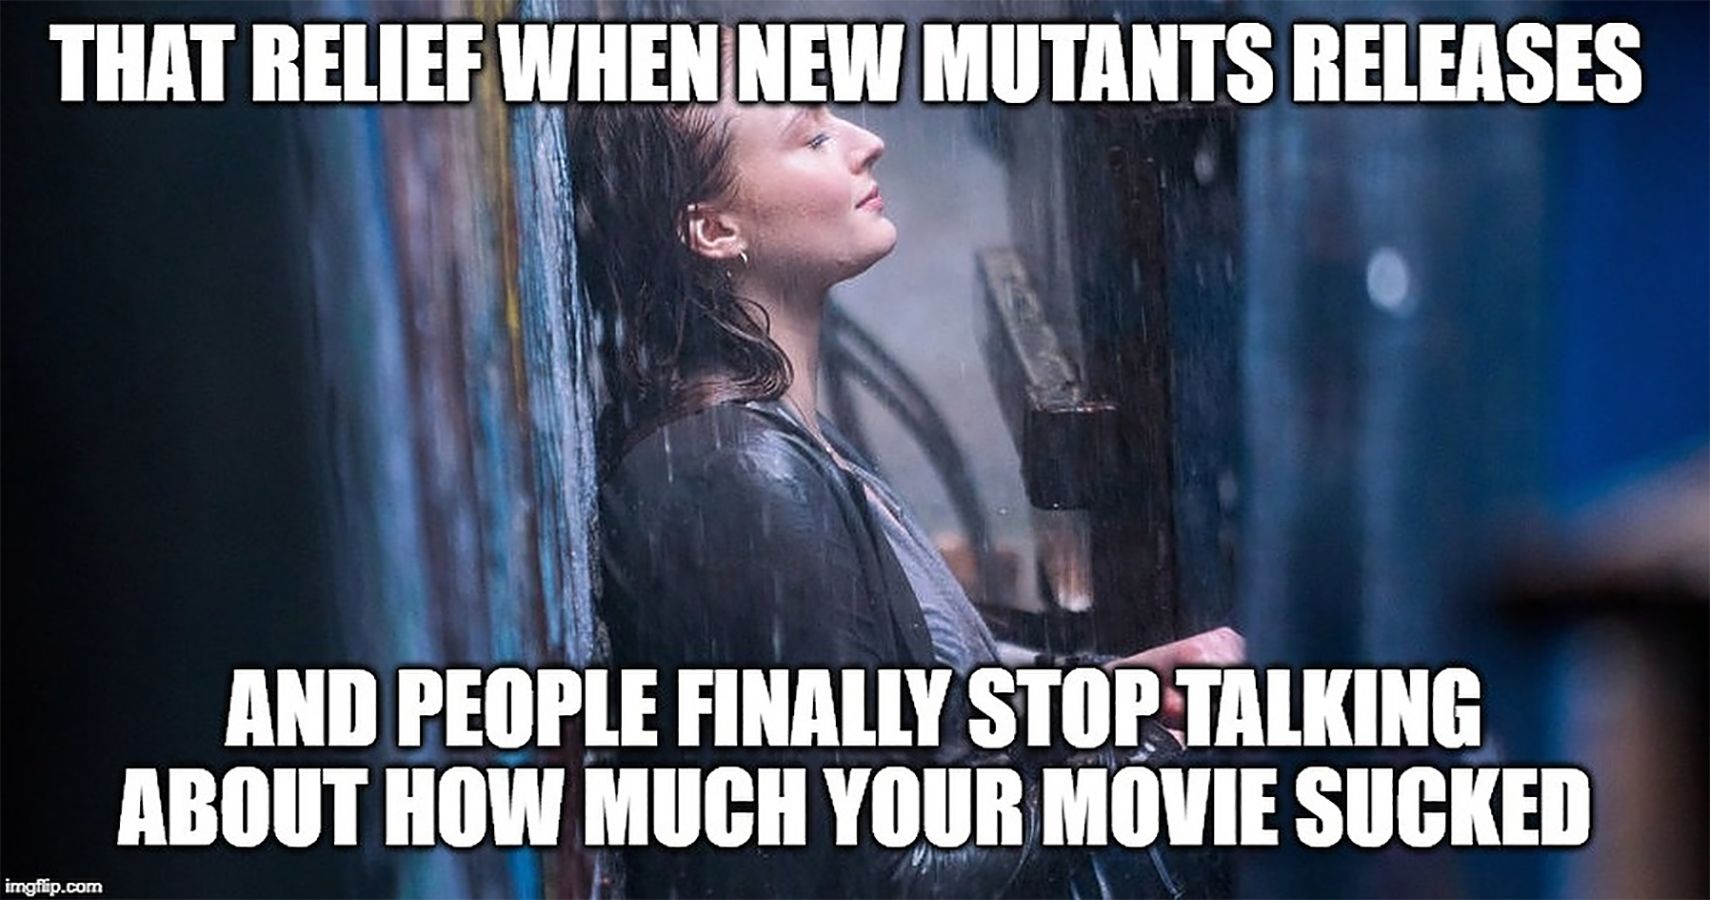 10 Hilarious Memes Celebrating The New Mutants' Release